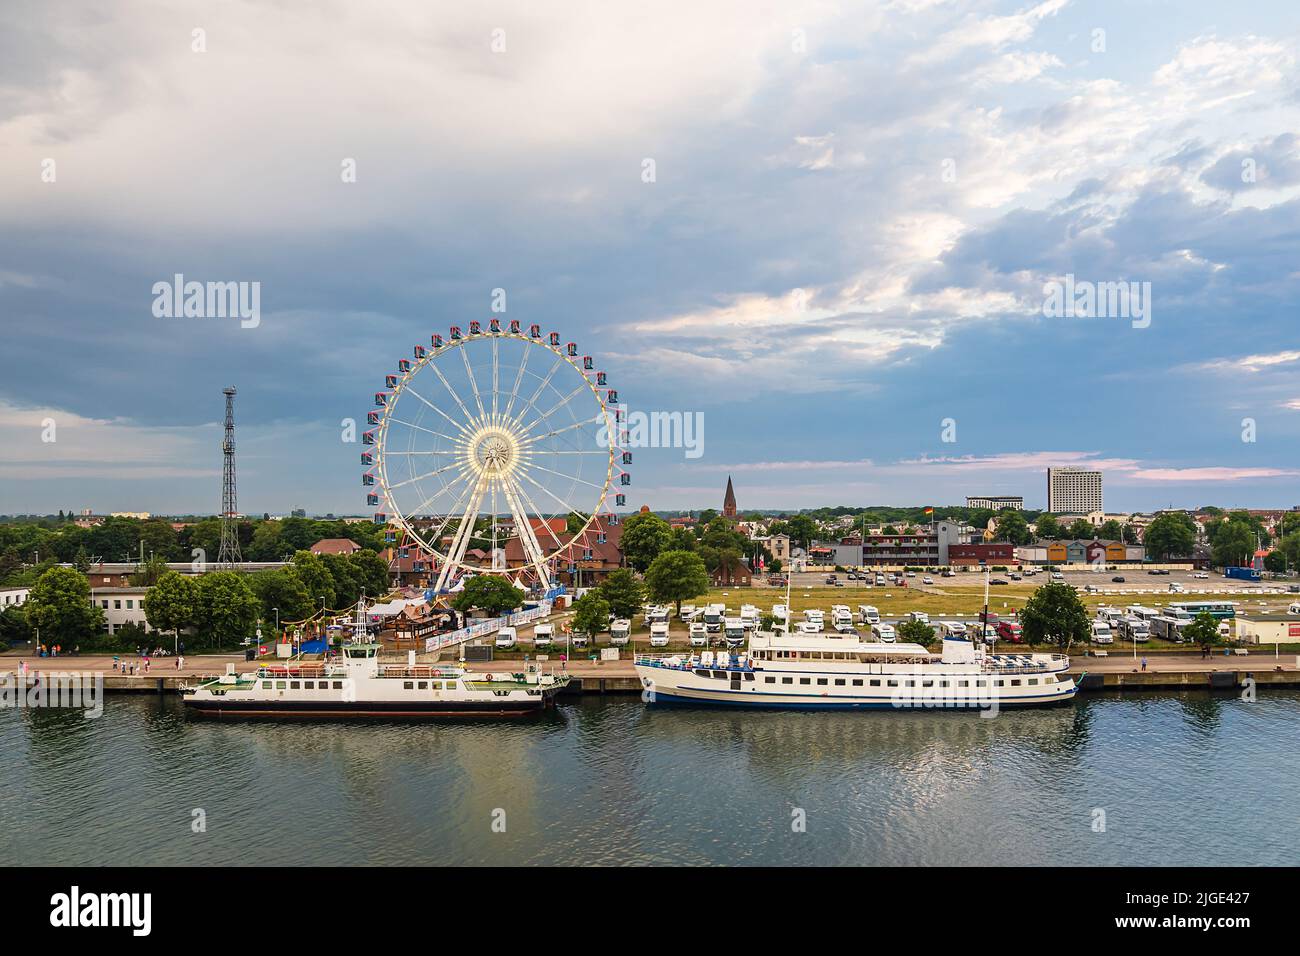 Ferris wheel on the Baltic Sea coast in Warnemuende, Germany. Stock Photo